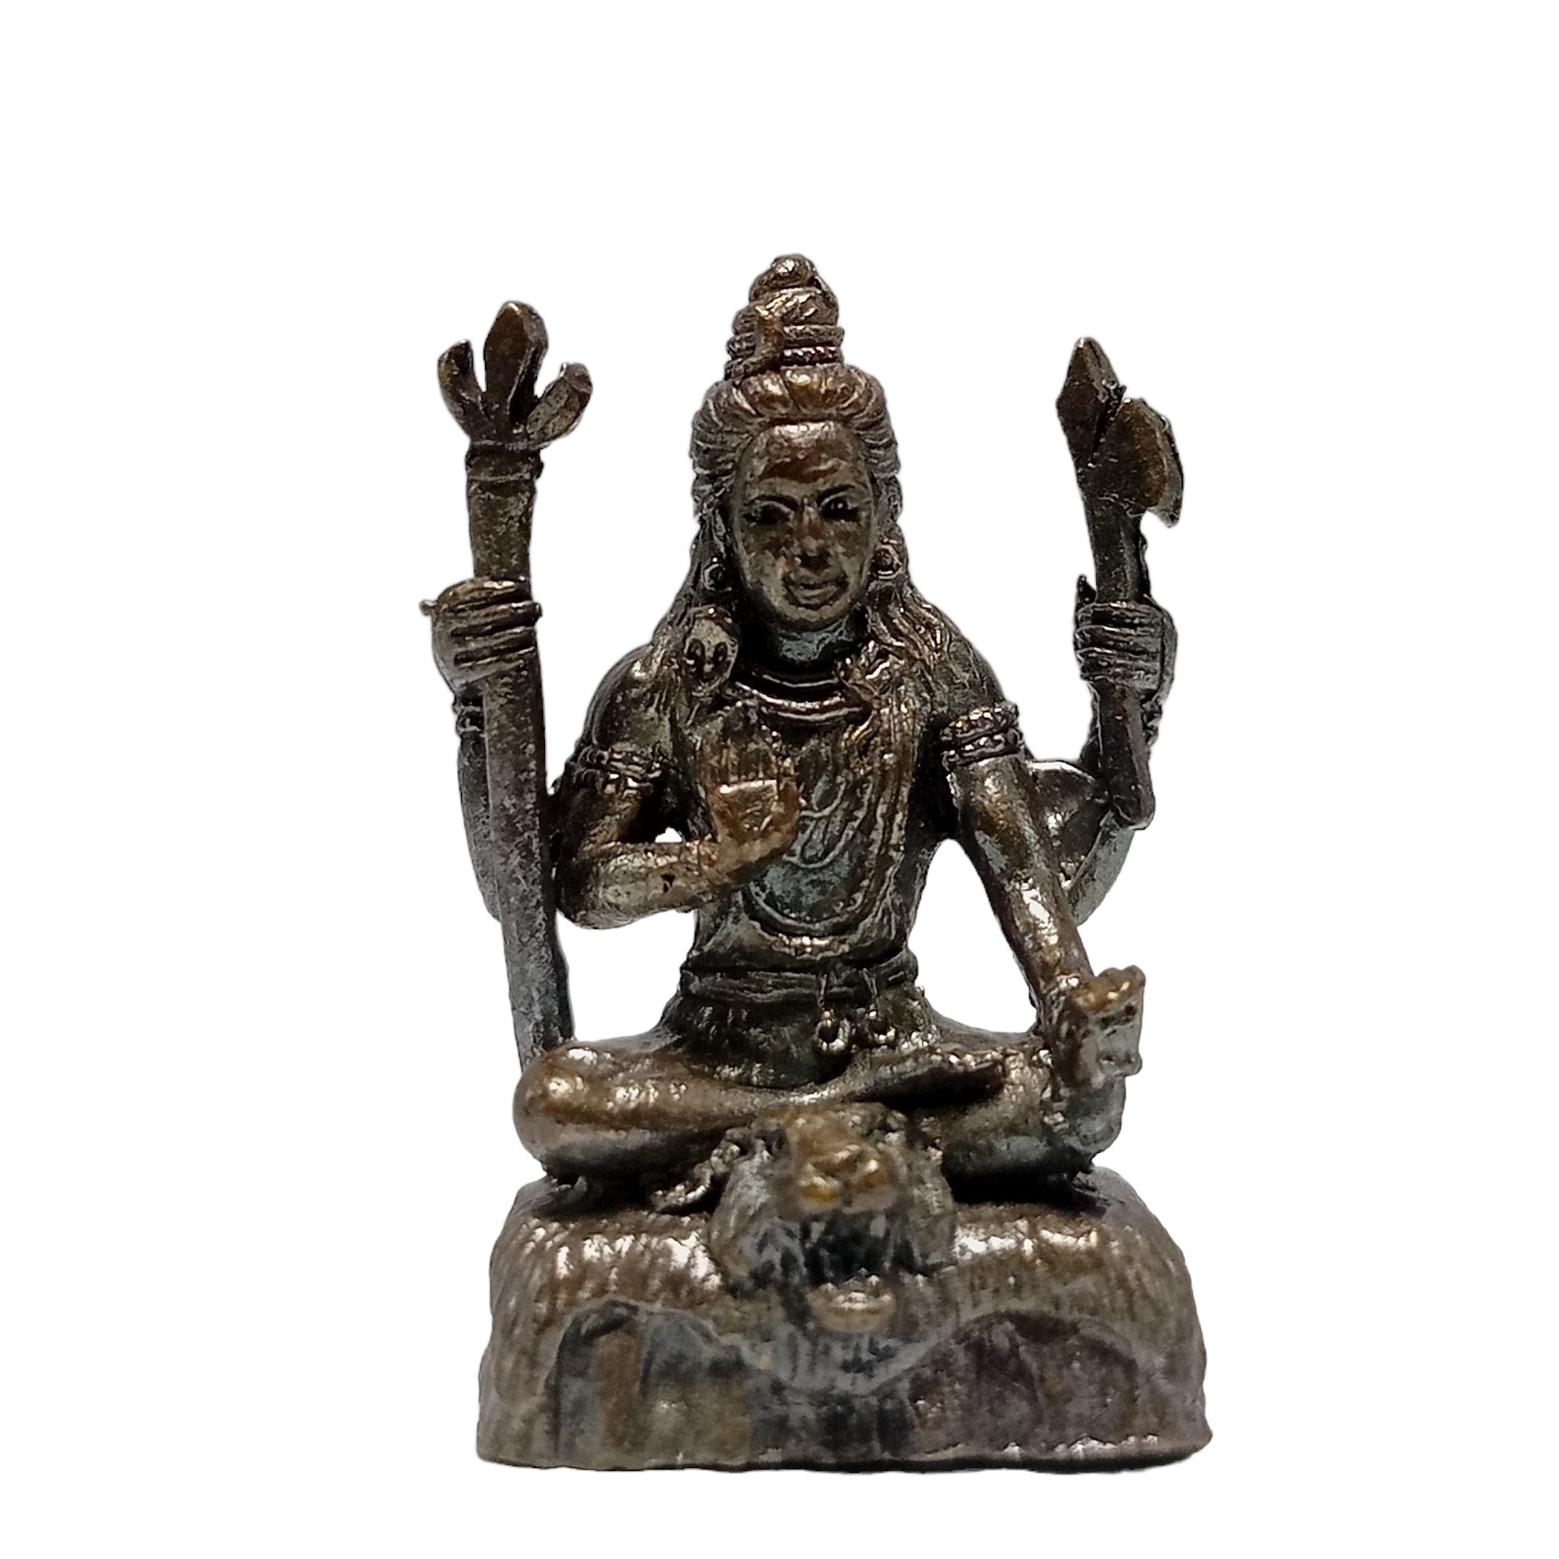 Lord Shiva Shiv Idol Black Statue Brass Hindu God Meditation Yoga Small Figurine